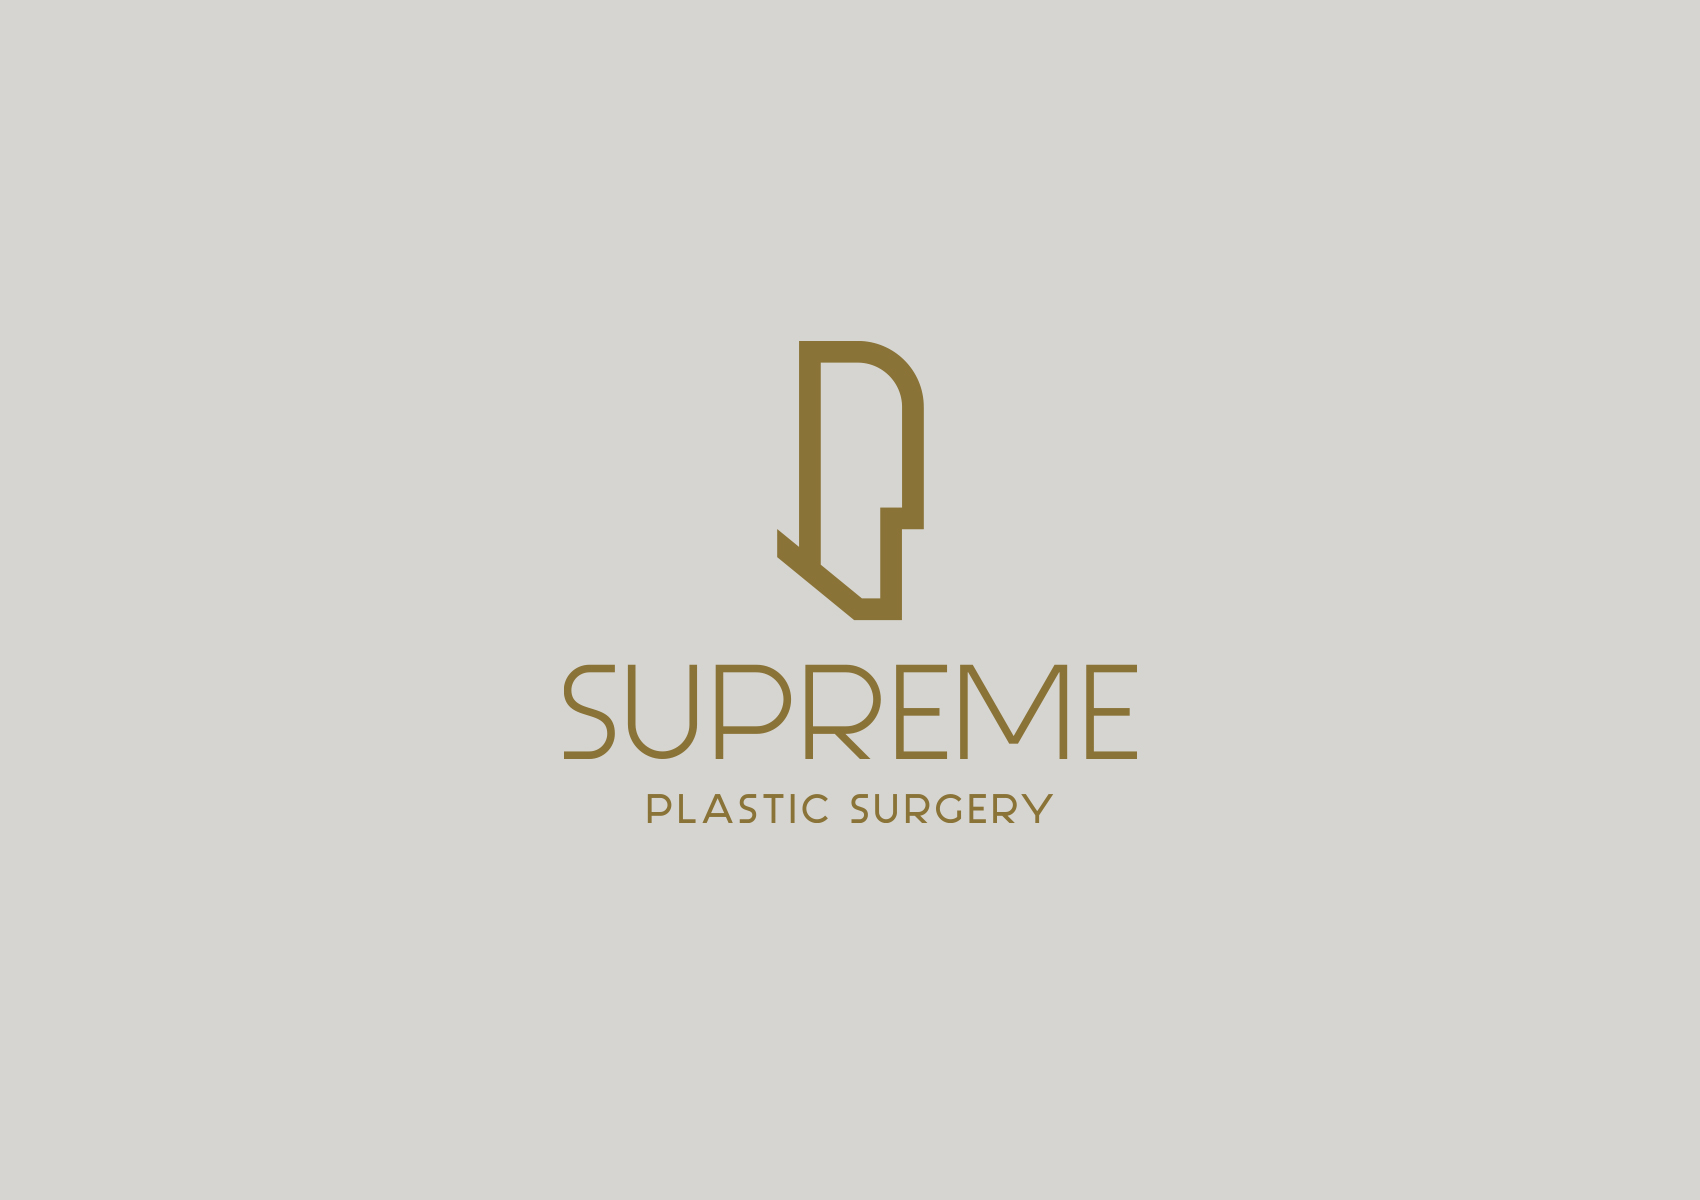 Supreme Plastic Surgery logo 1700x1200 by xhristakis